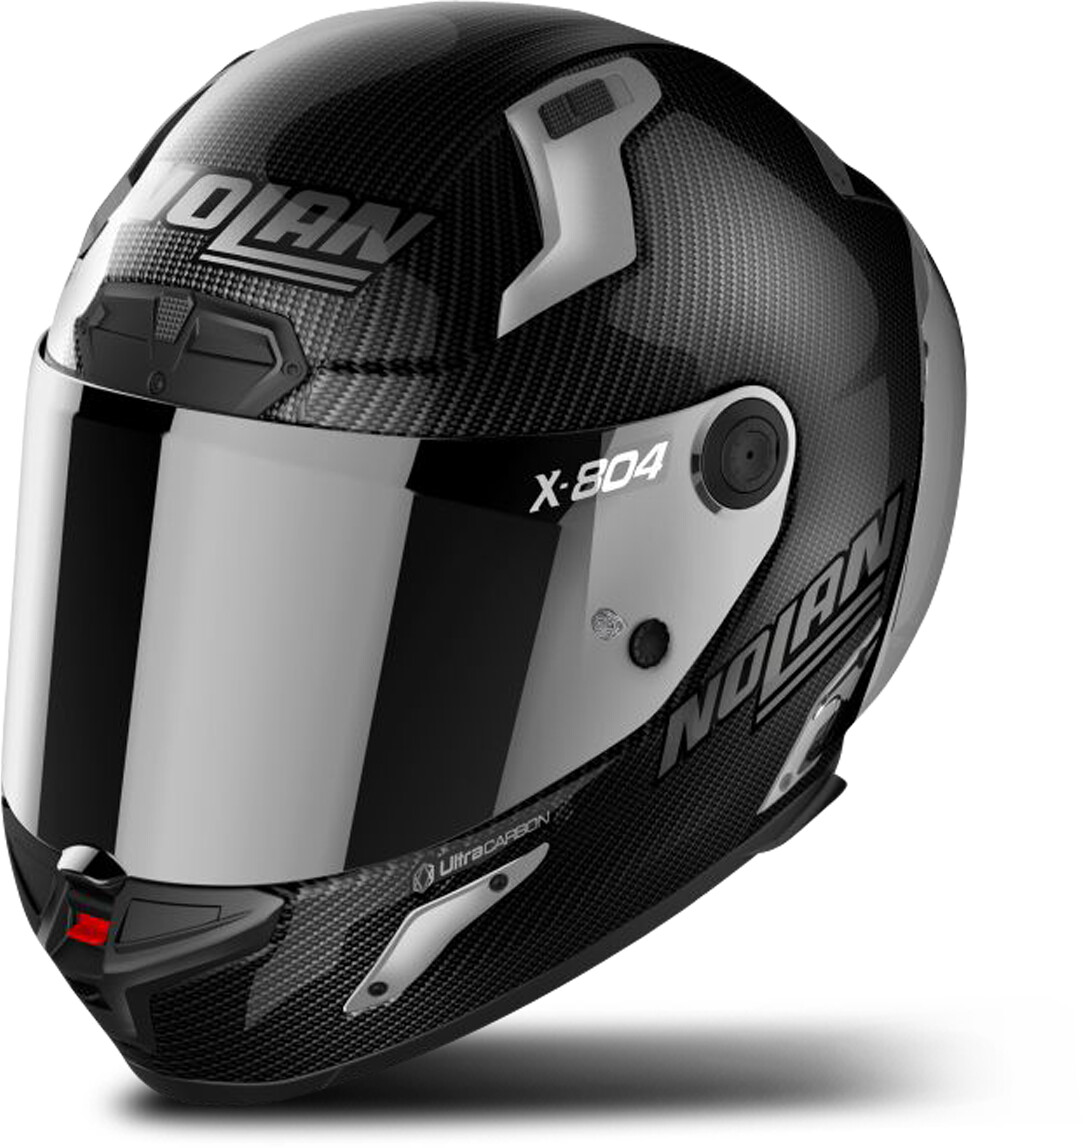 Photos - Motorcycle Helmet Nolan X-804 RS Ultra Carbon Silver Edition black/silver 